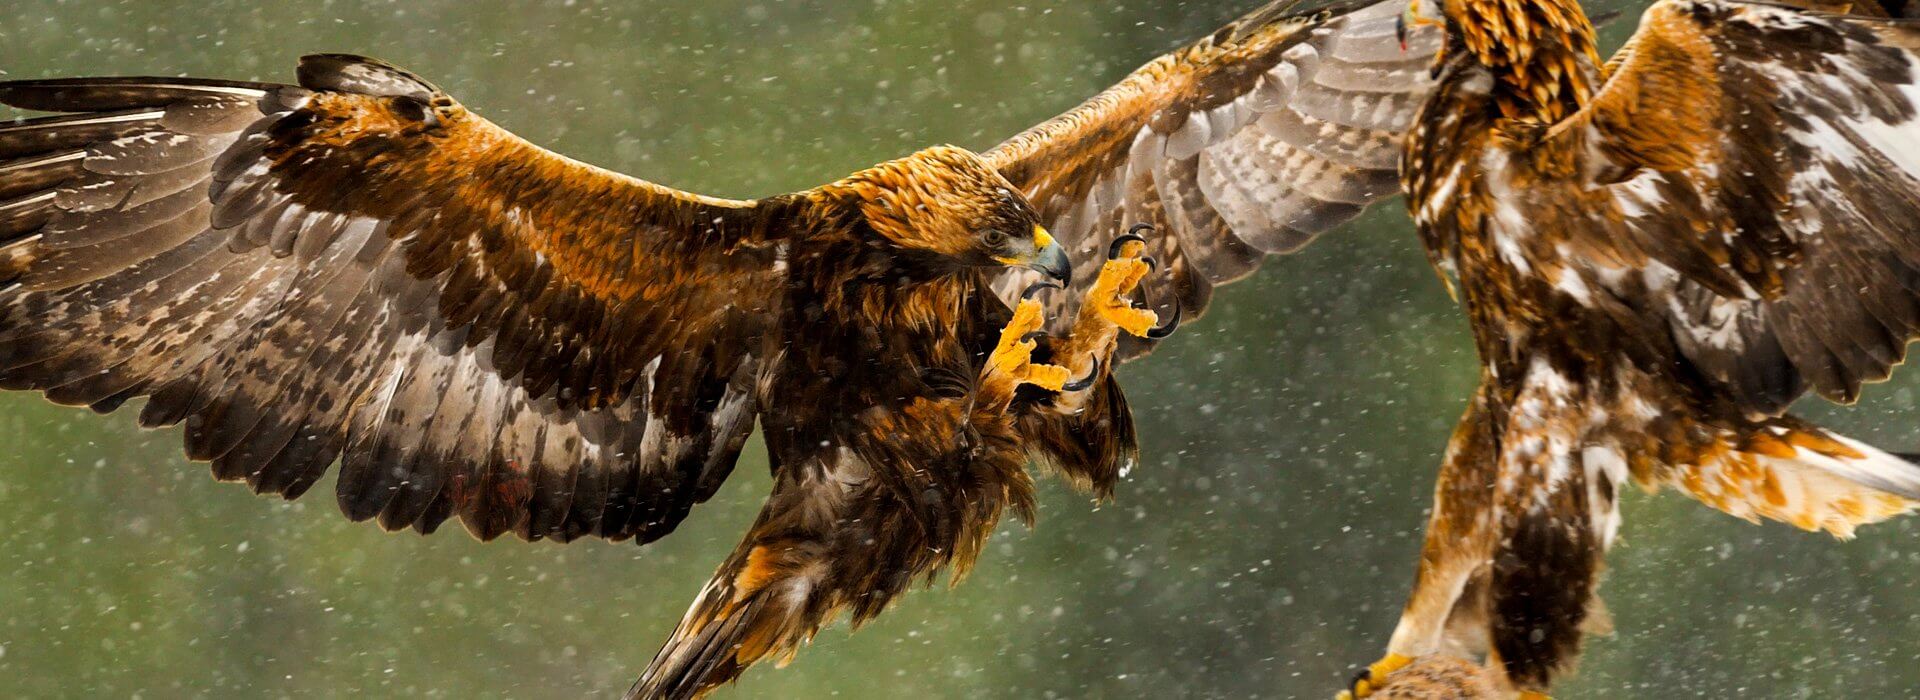 Golden Eagles, Vladimir Kogan Michael/Shutterstock